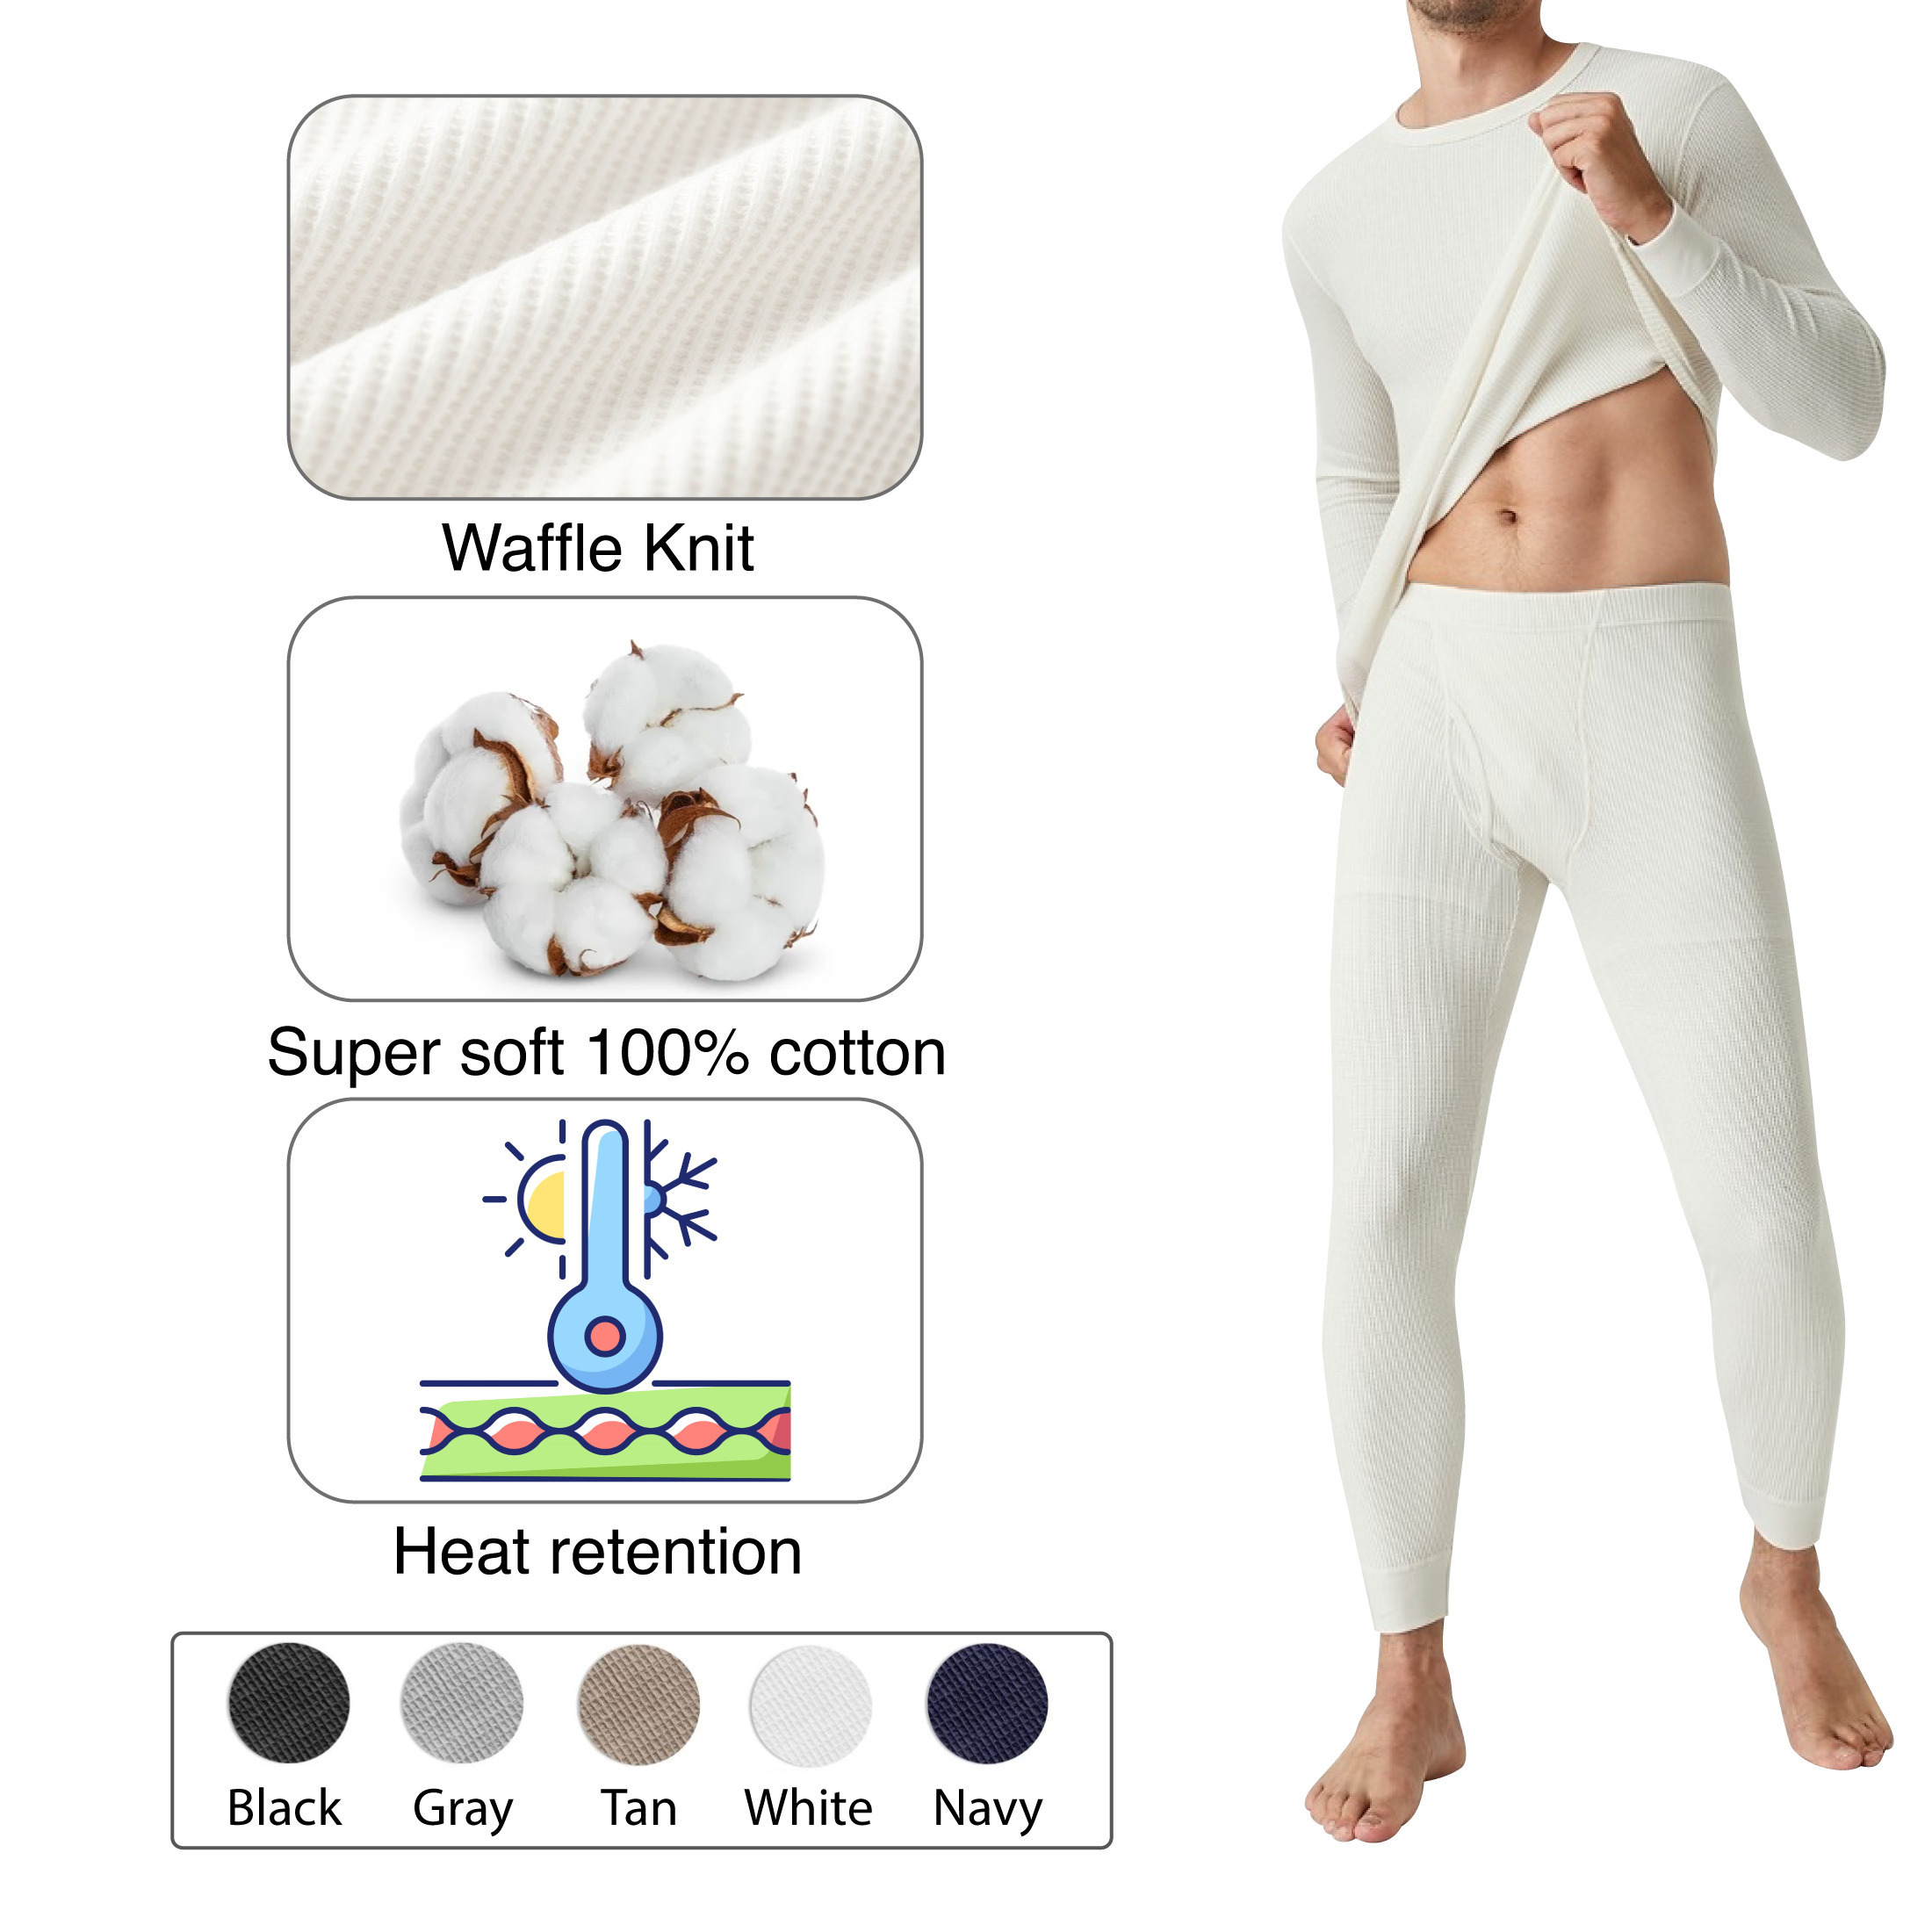 2-Piece: Men's Super Soft Cotton Waffle Knit Winter Thermal Underwear Set - Navy, X-Large